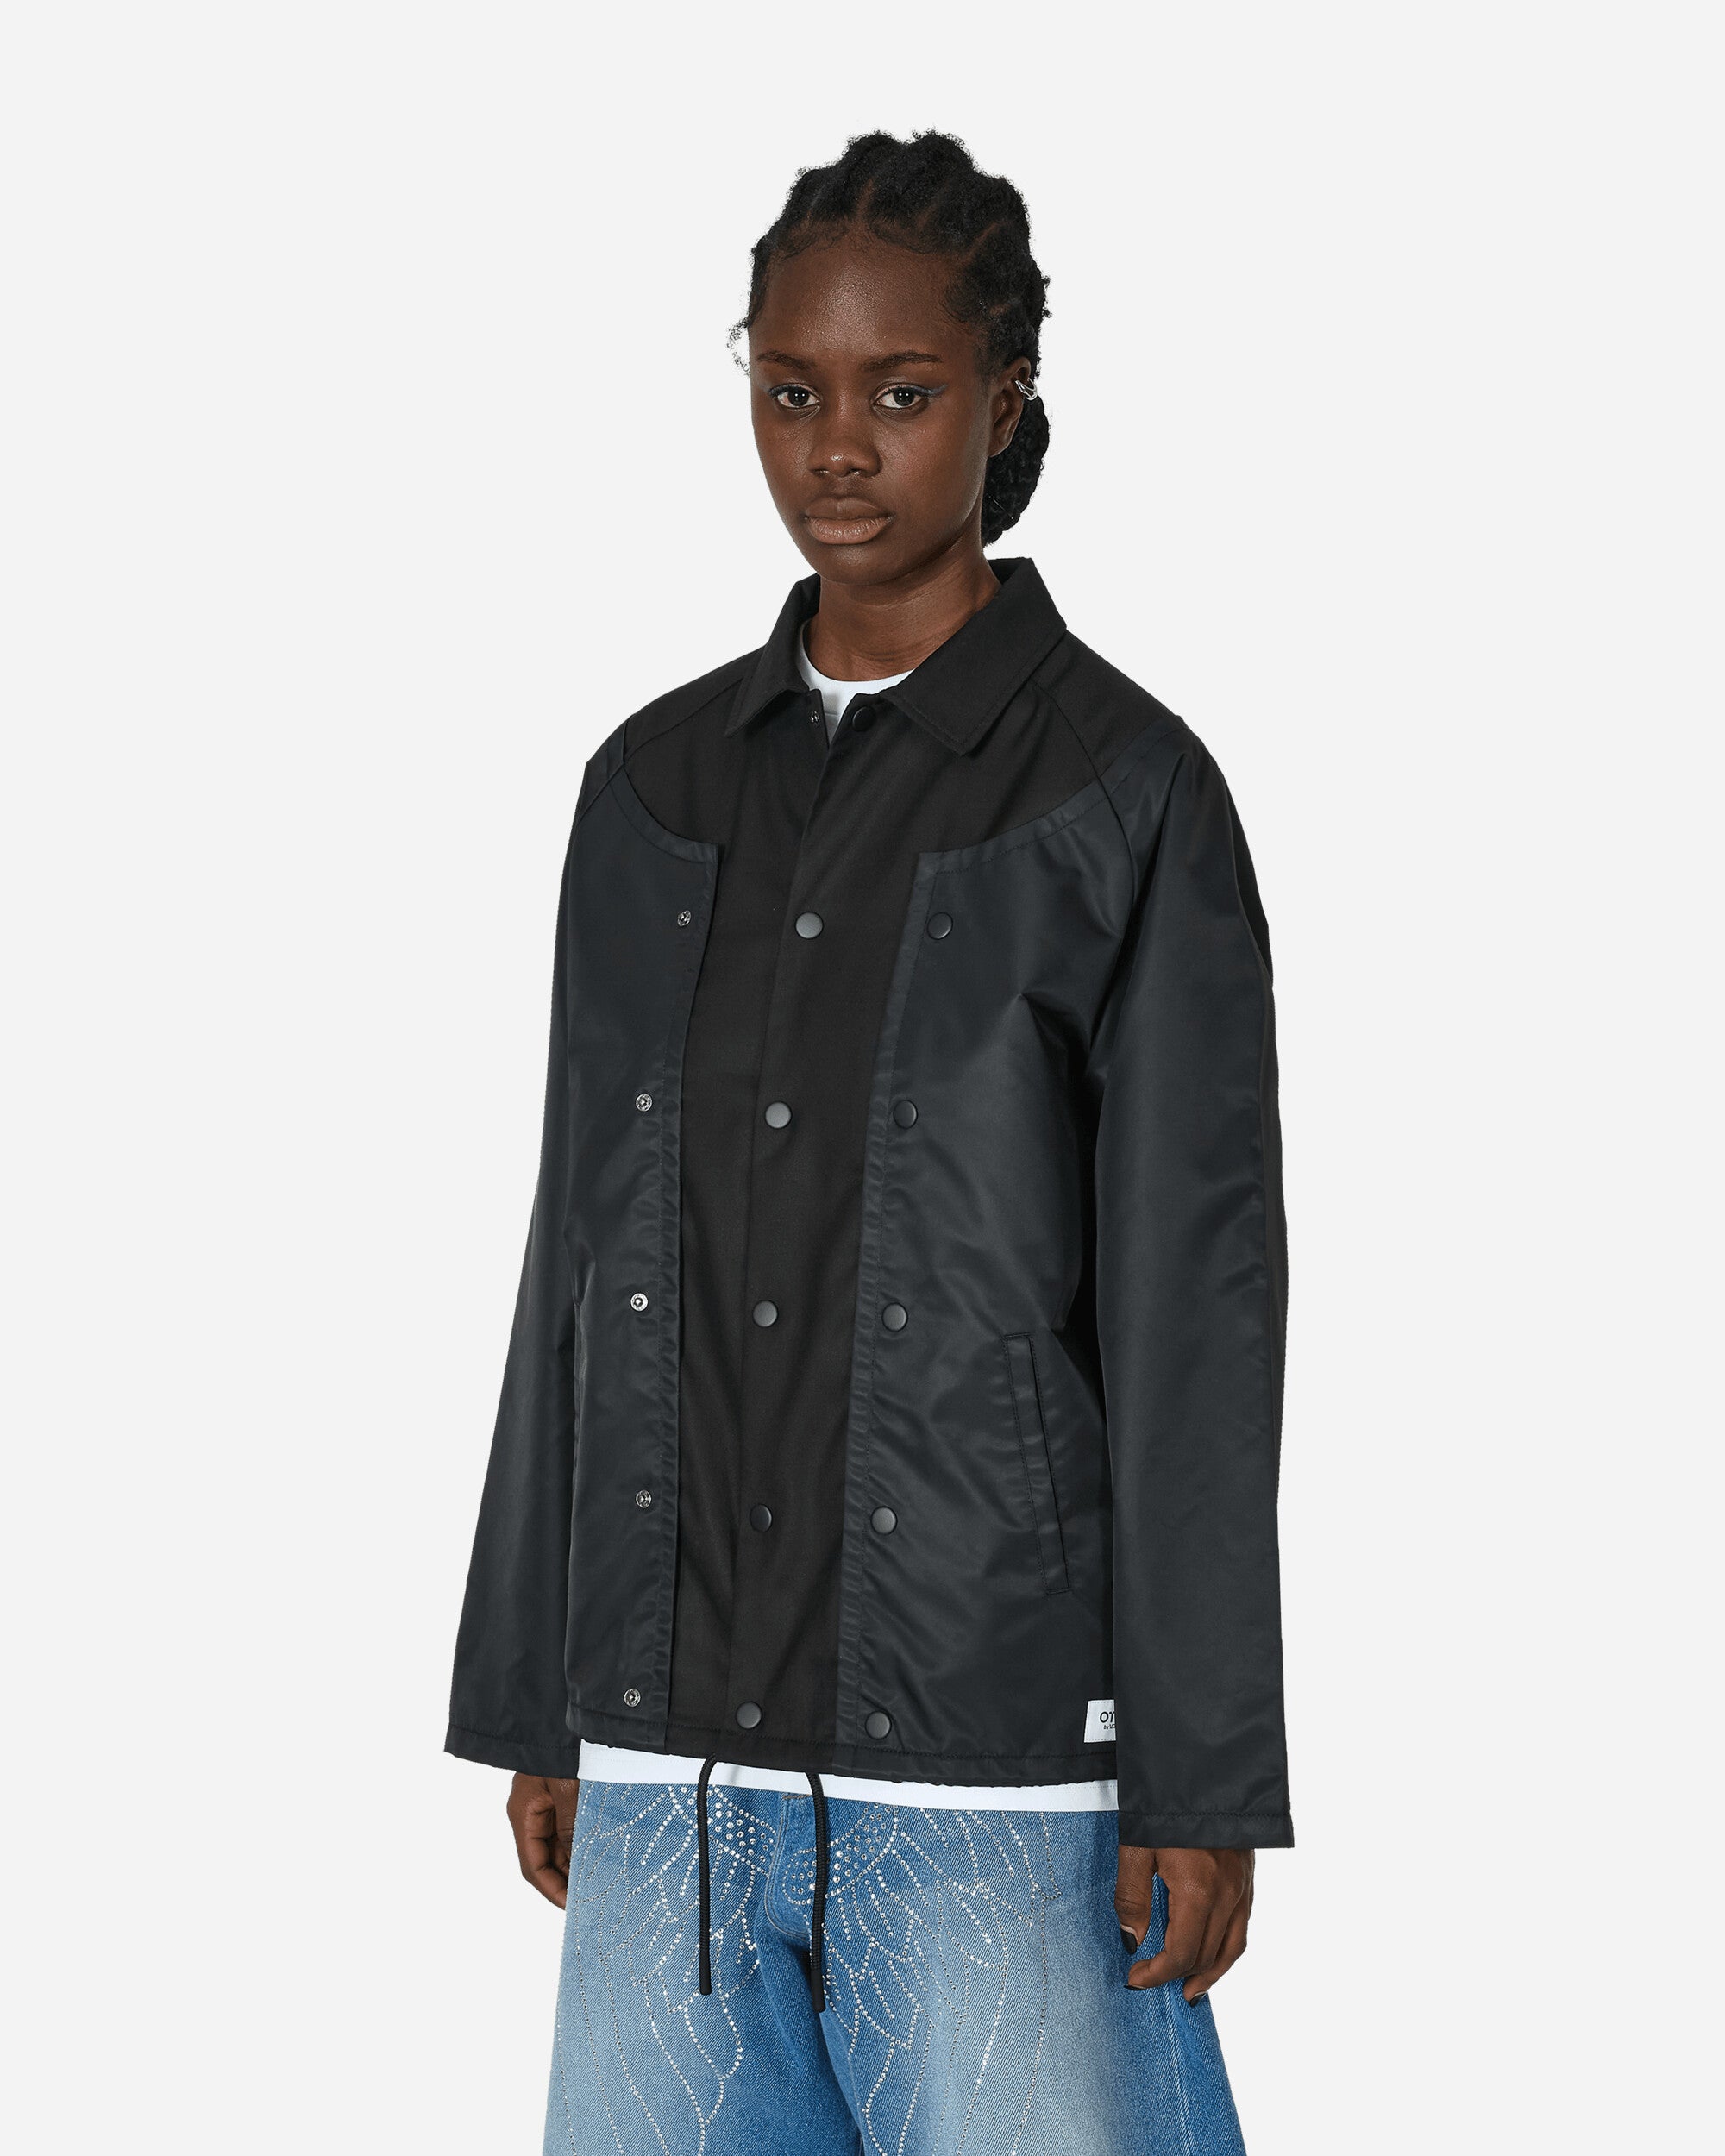 Vans Duo Tone Coaches Jacket Otw Black Coats and Jackets Jackets VN000GBXBLK1